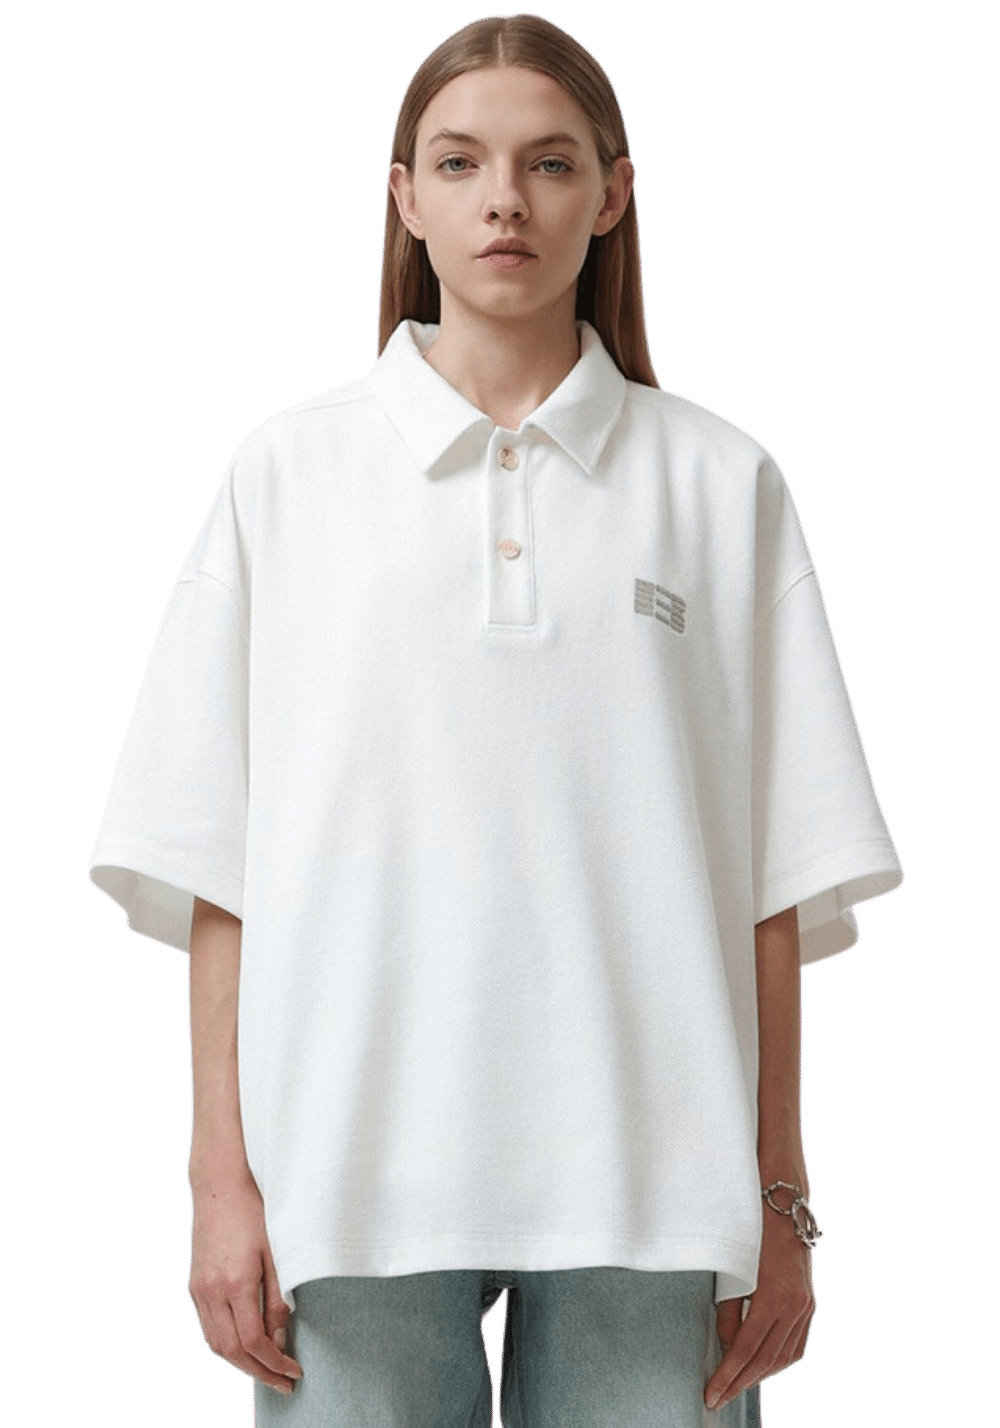 Basic Polo Shirt - PSYLOS 1, Basic Polo Shirt, T-Shirt, Boneless, PSYLOS 1